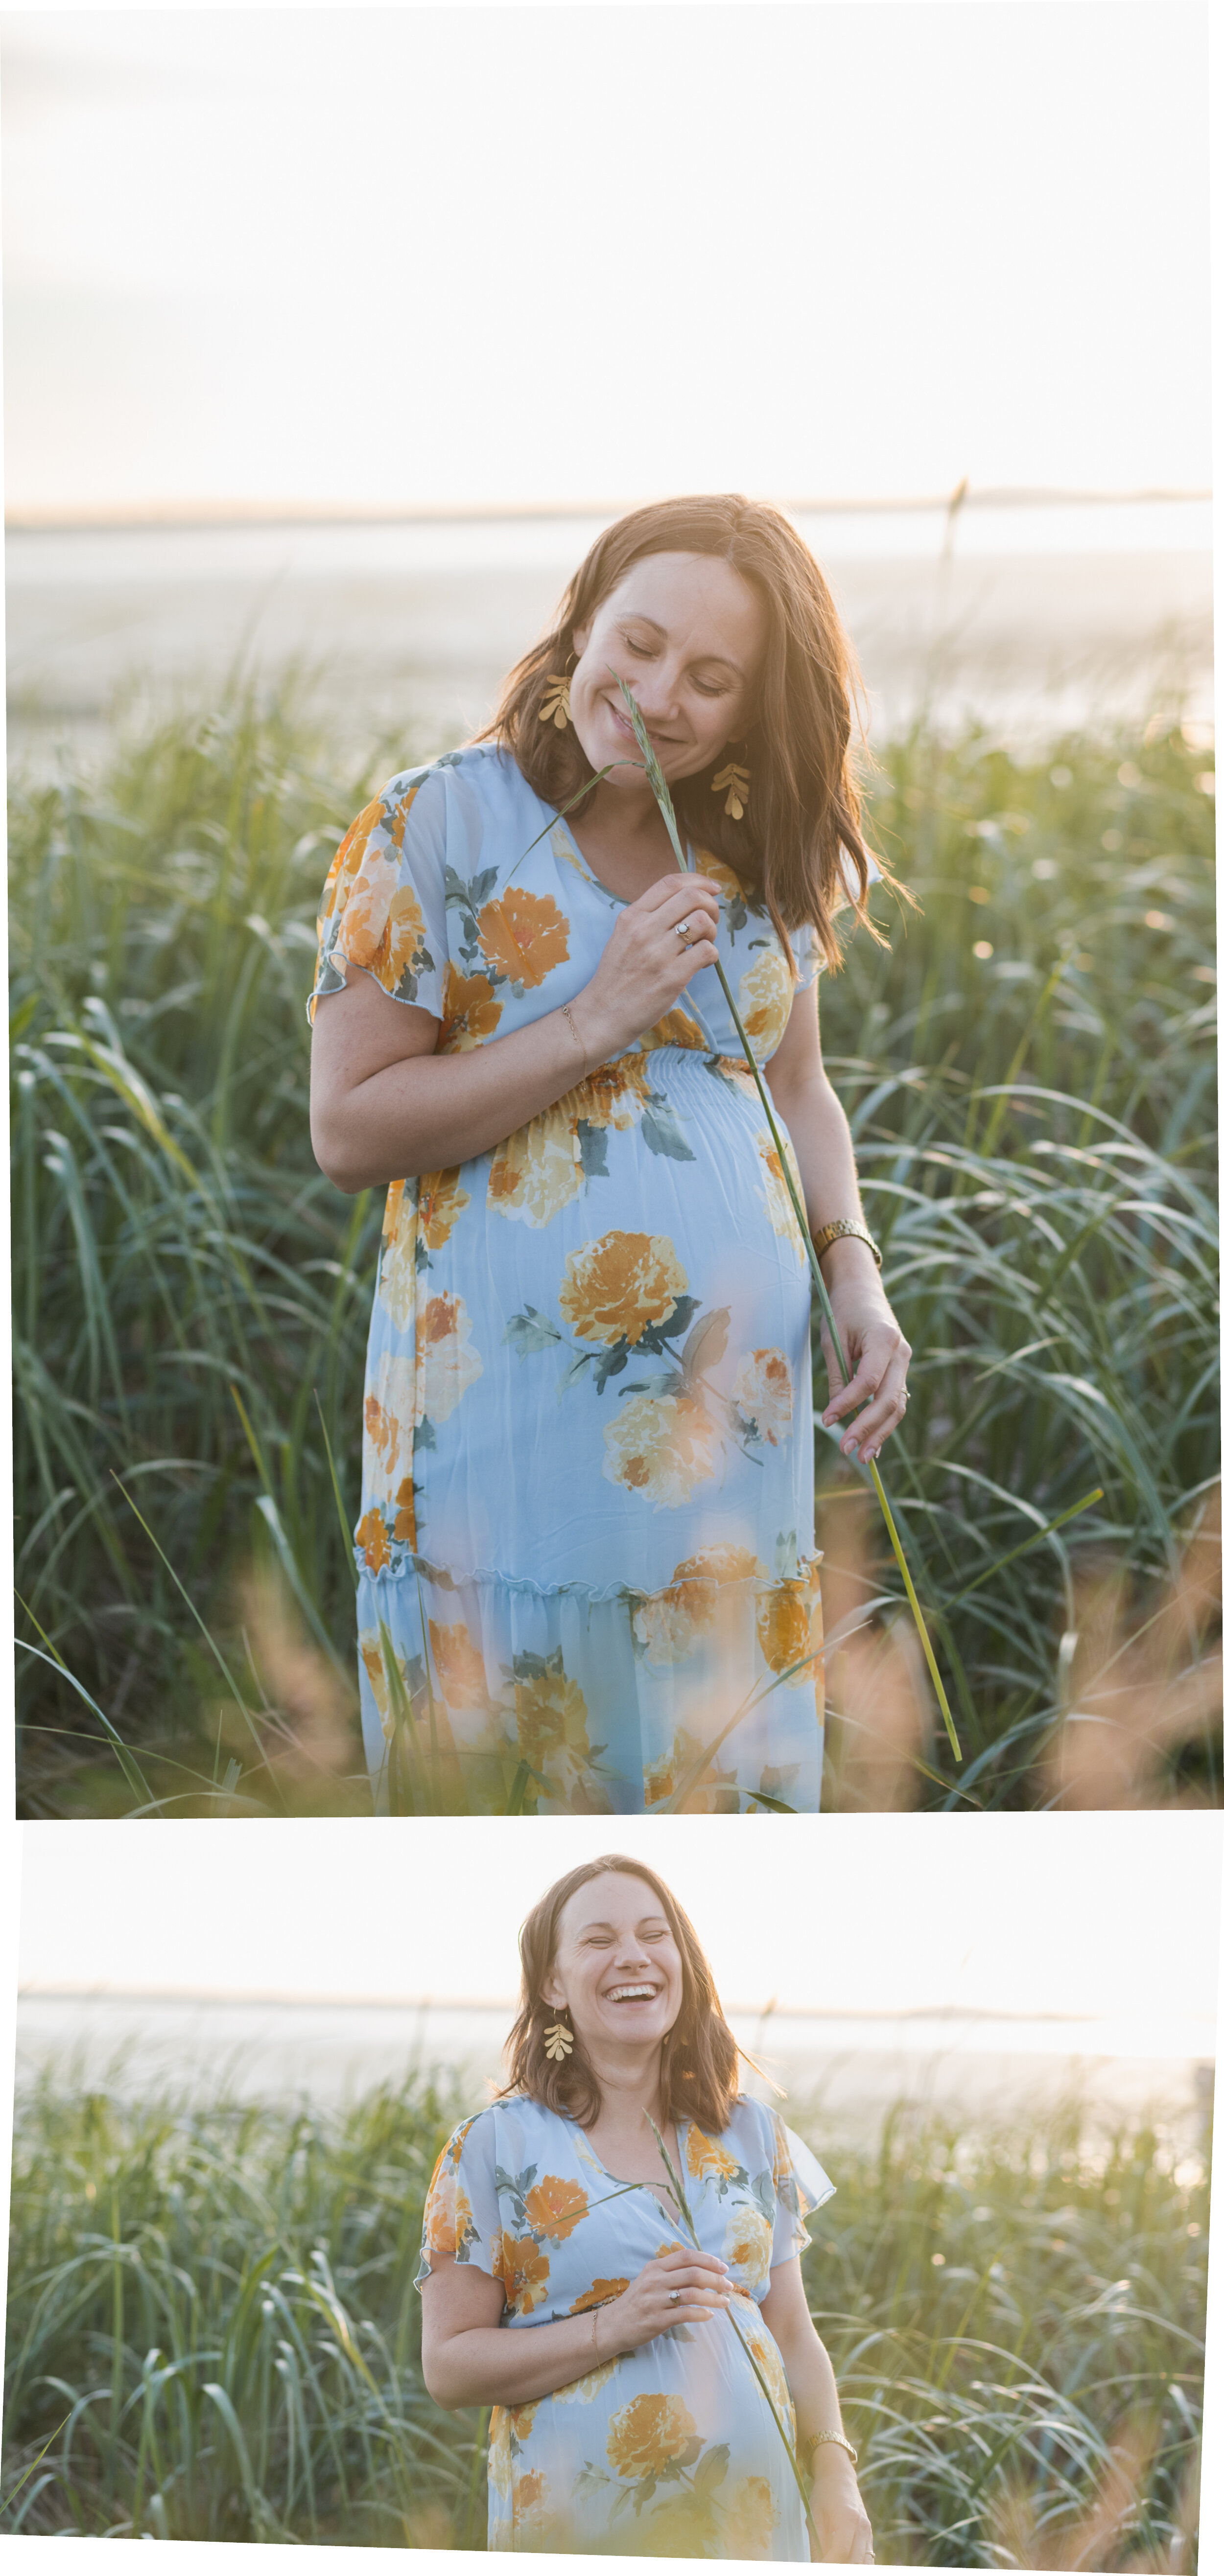 Pregnant woman beach grass sunset laughing